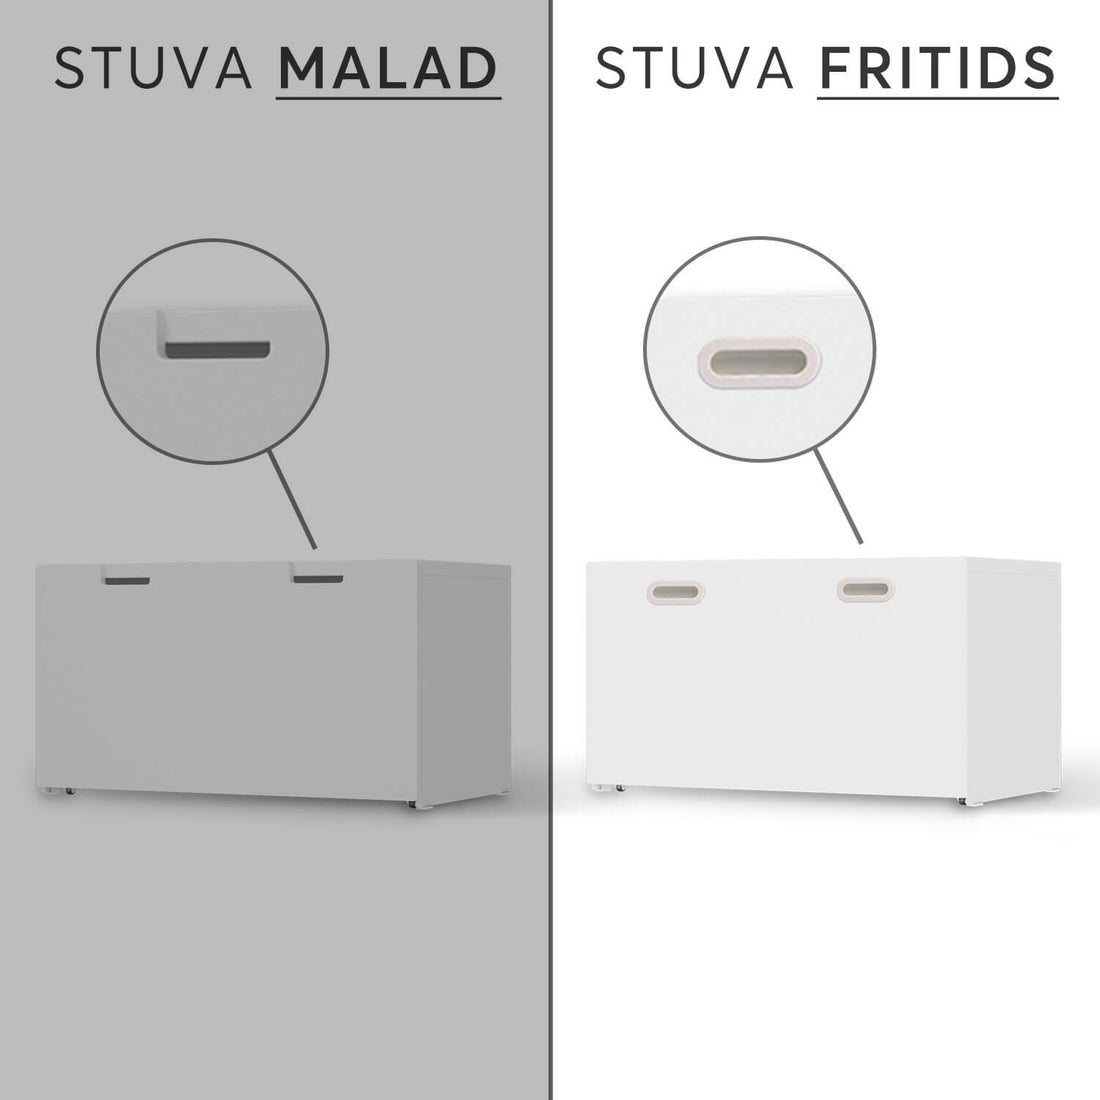 Vergleich IKEA Stuva Fritids / Malad - Coral Reef